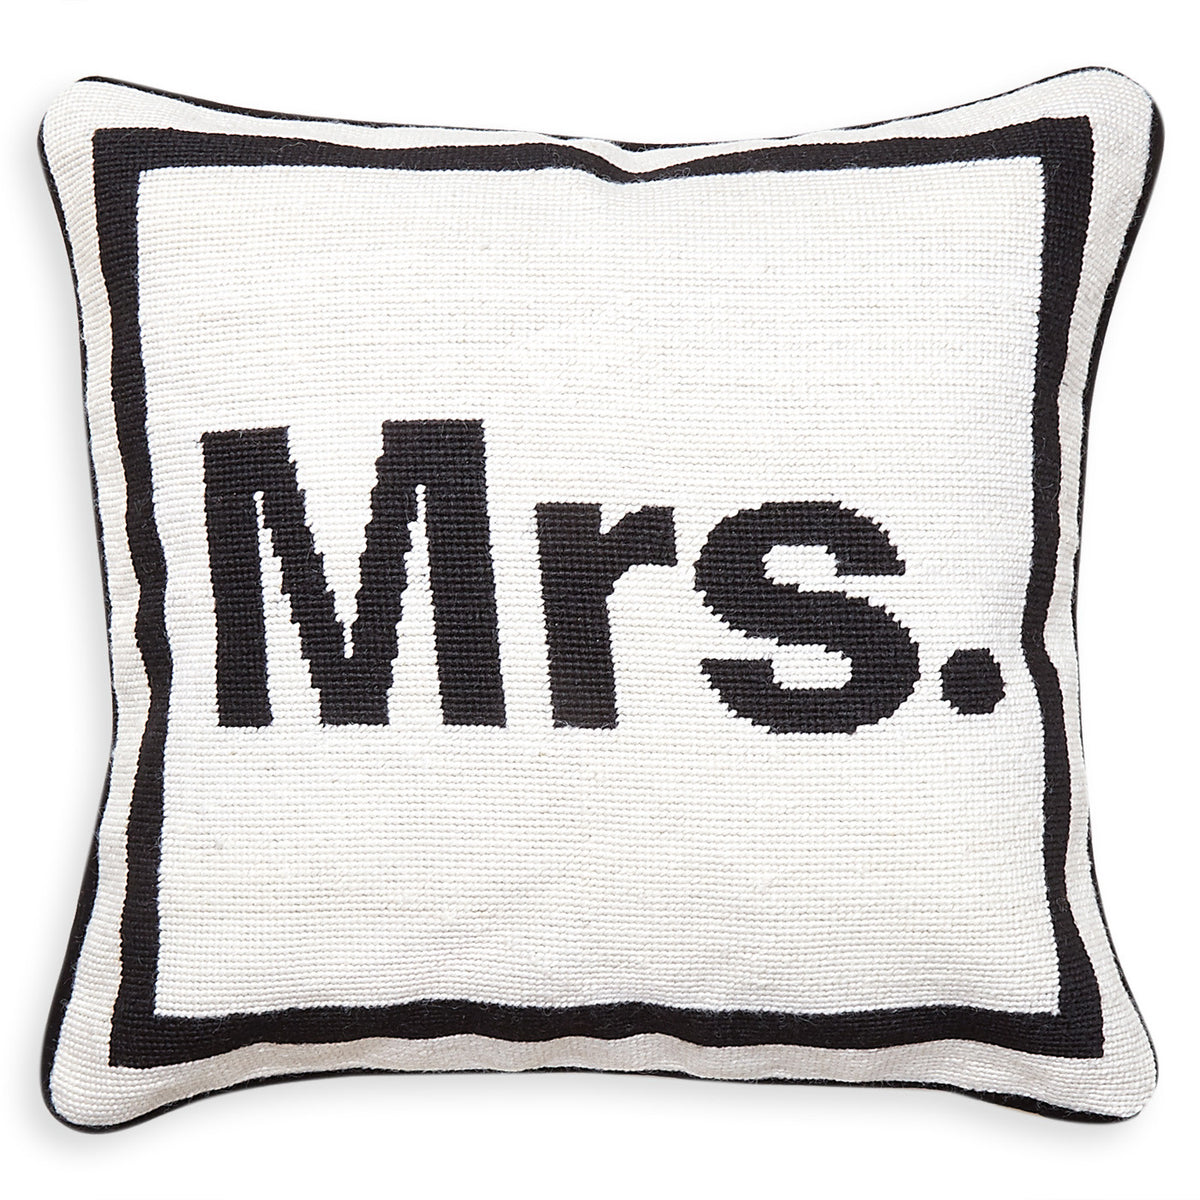 Mrs. Needlepoint Throw Pillow by Jonathan Adler